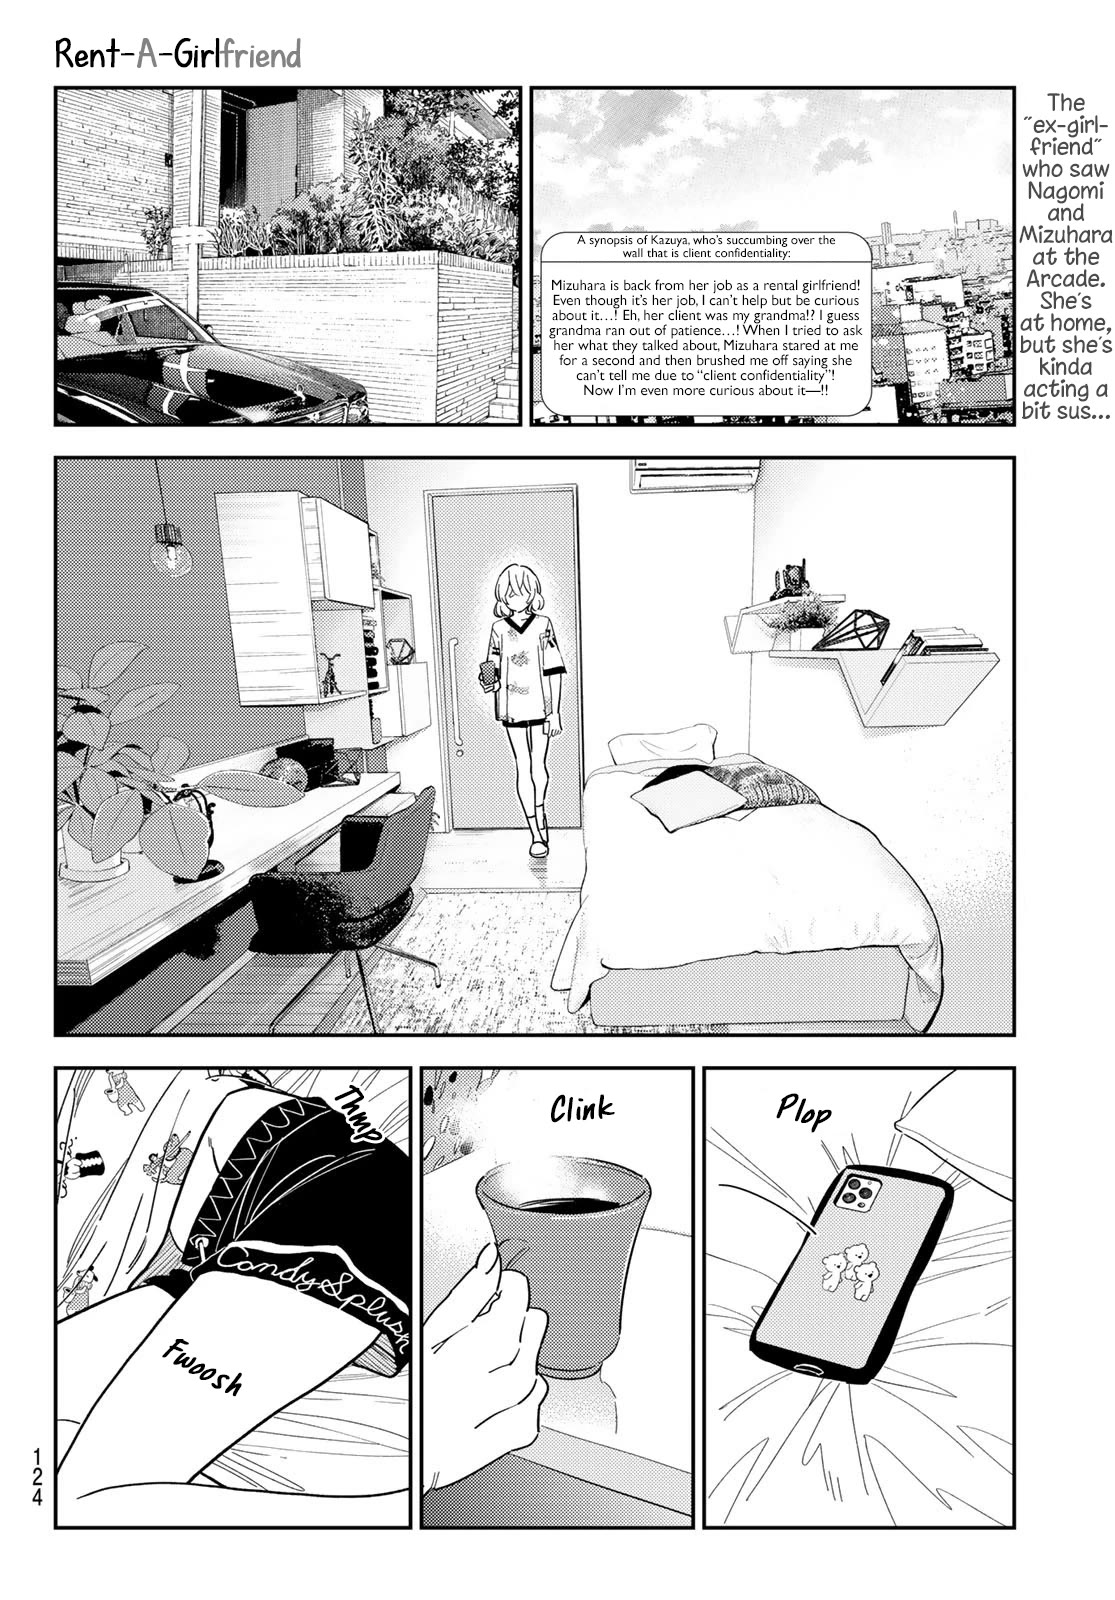 Read Kanojo Okarishimasu Manga Chapter 295 English - Manga Online